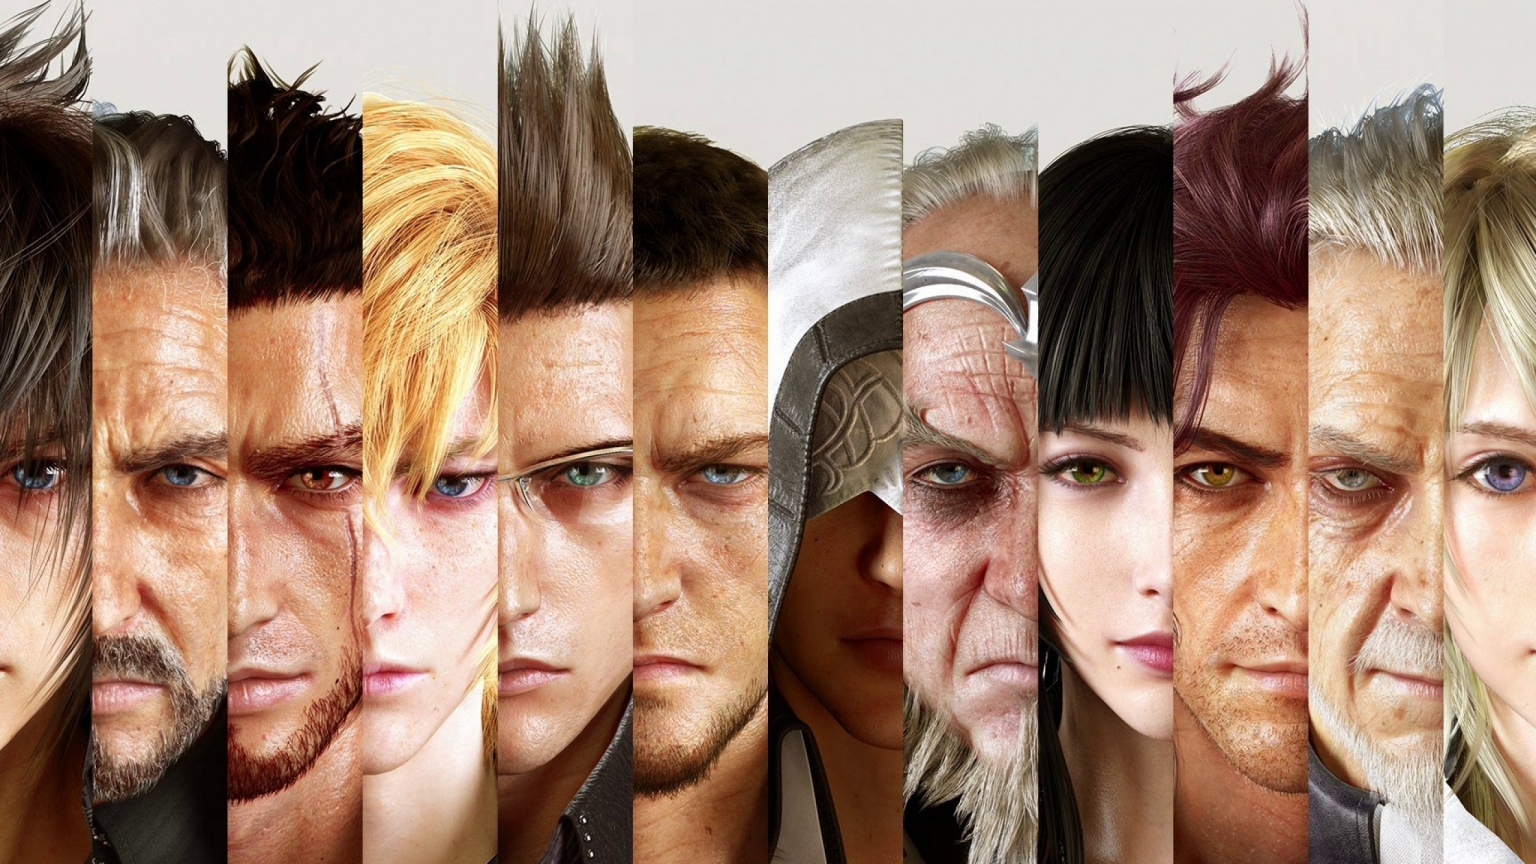 Final Fantasy XV Cast for 1536 x 864 HDTV resolution